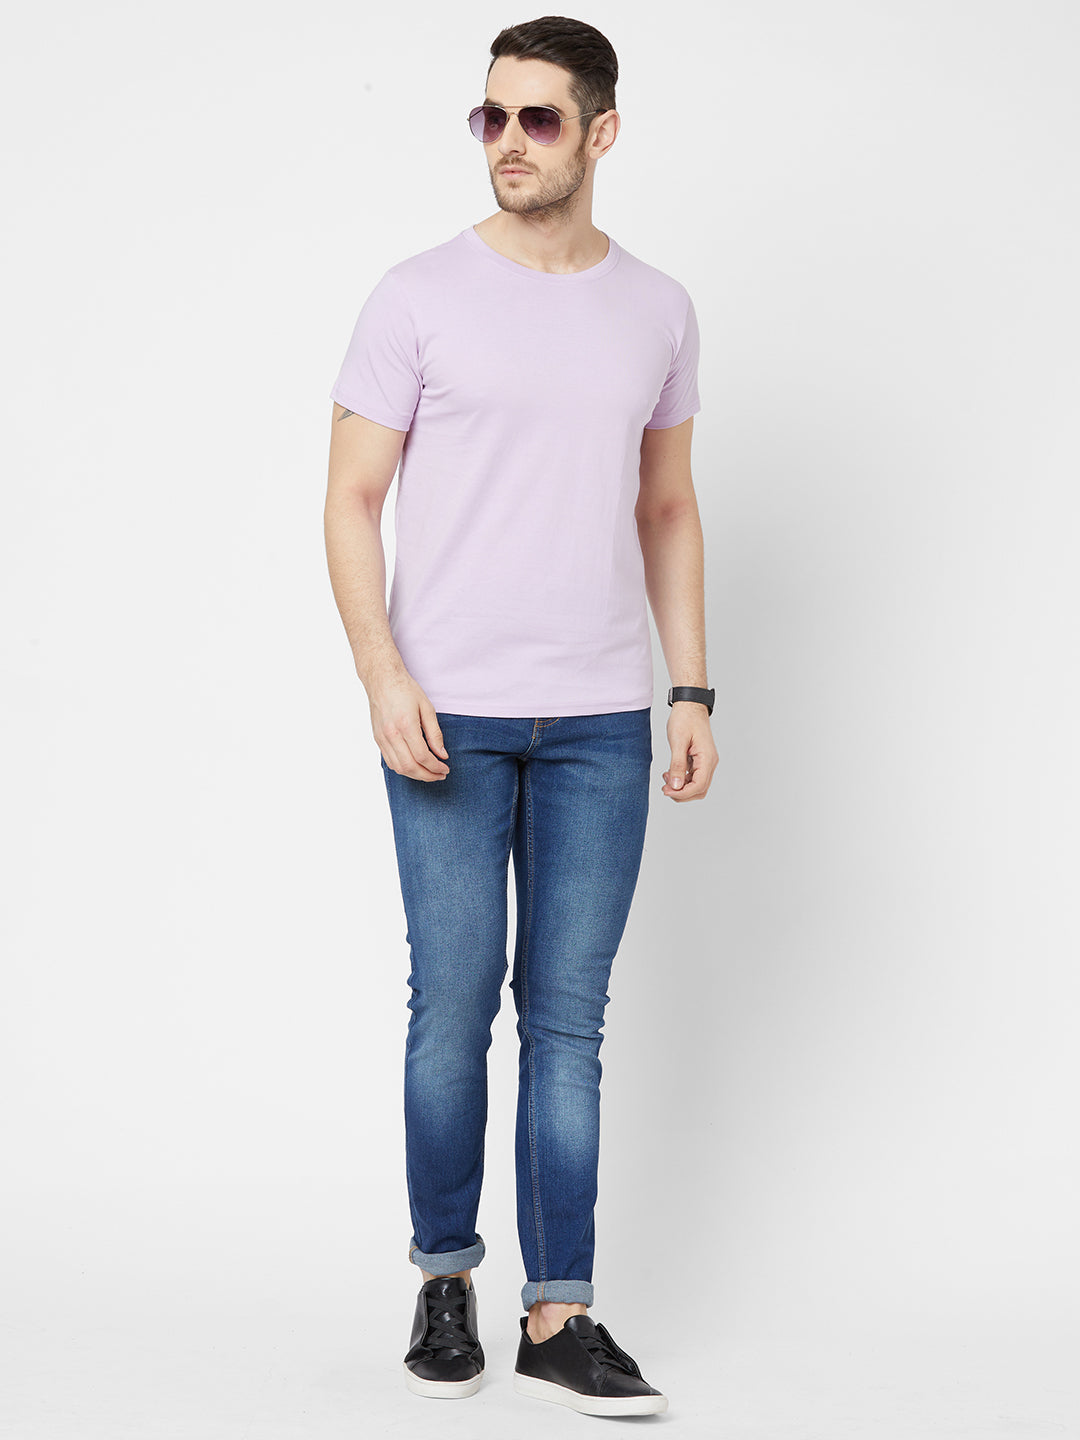 Basic Mauve Purple T-Shirt